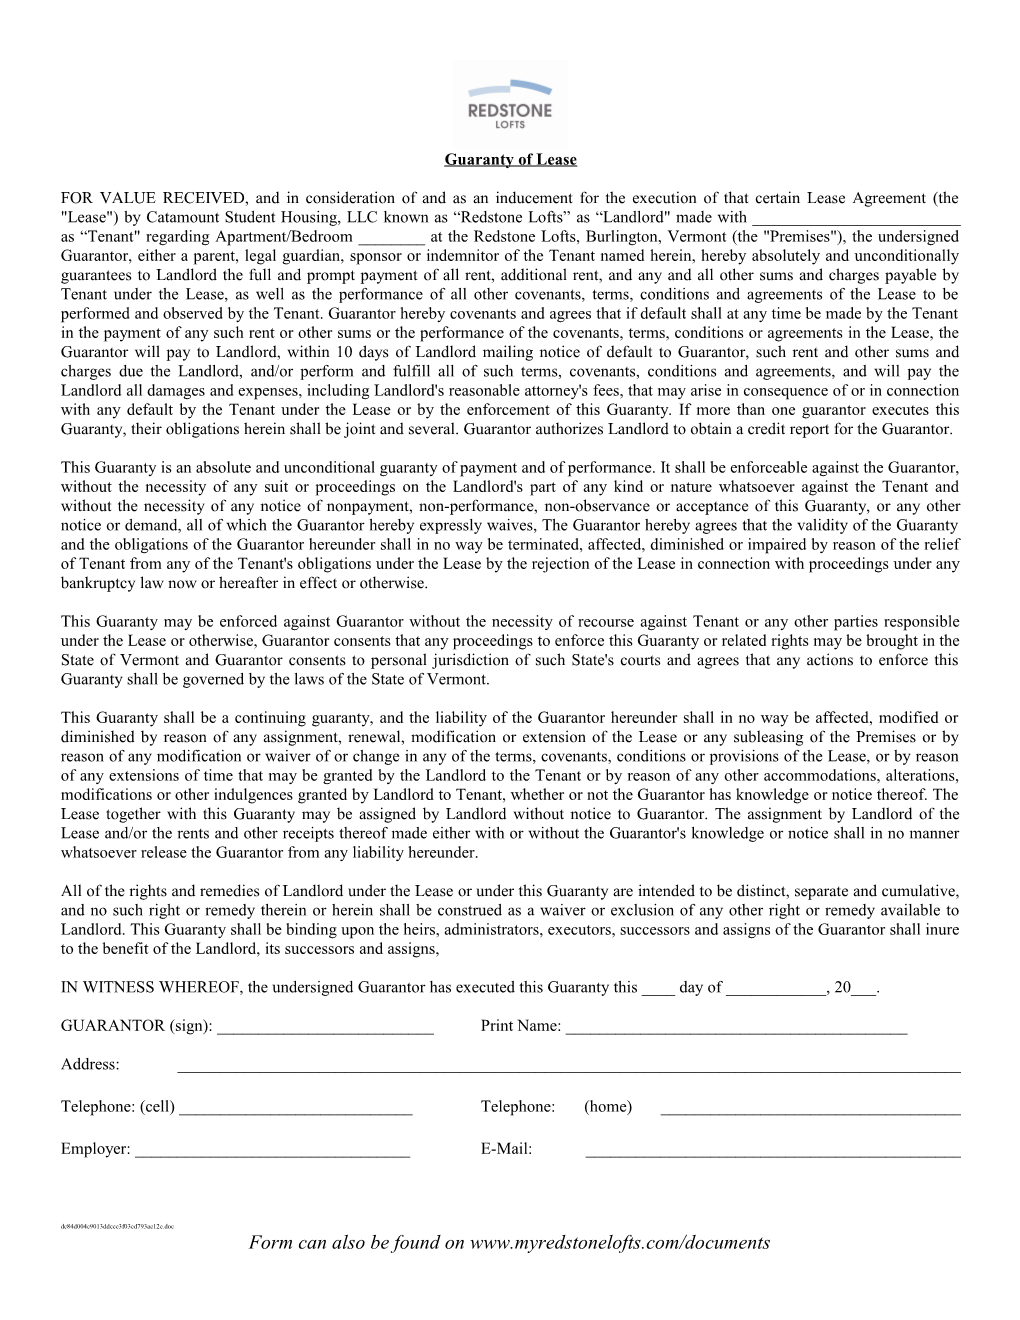 Redstone Lofts - Lease Guaranty Form (00072416-2)